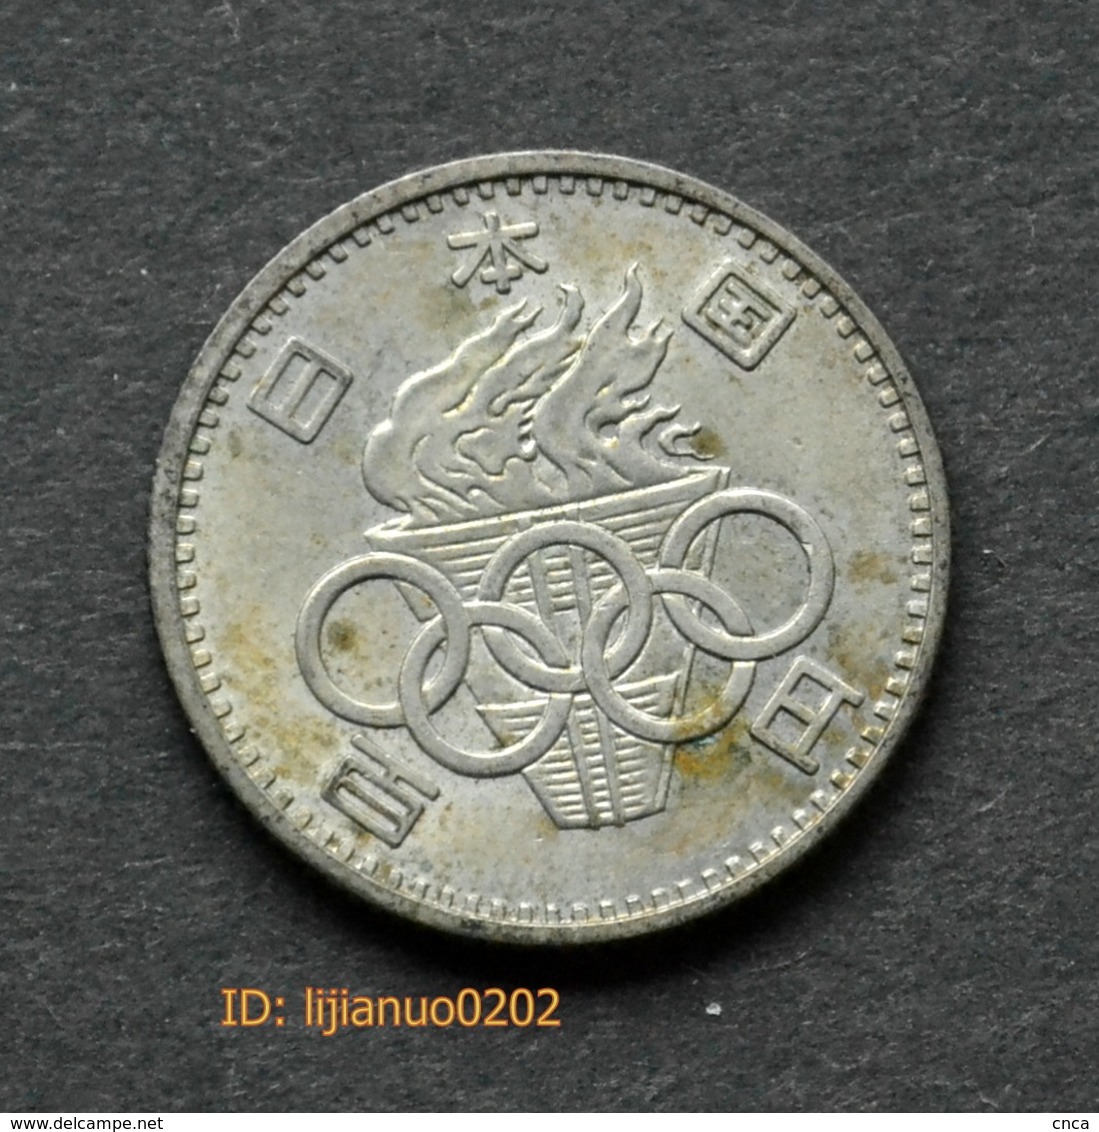 1964 Japan Silver Münzen 100 Yen XVIII Summer Olympic Games Tokyo  Y79 Commemorative COIN - Japan